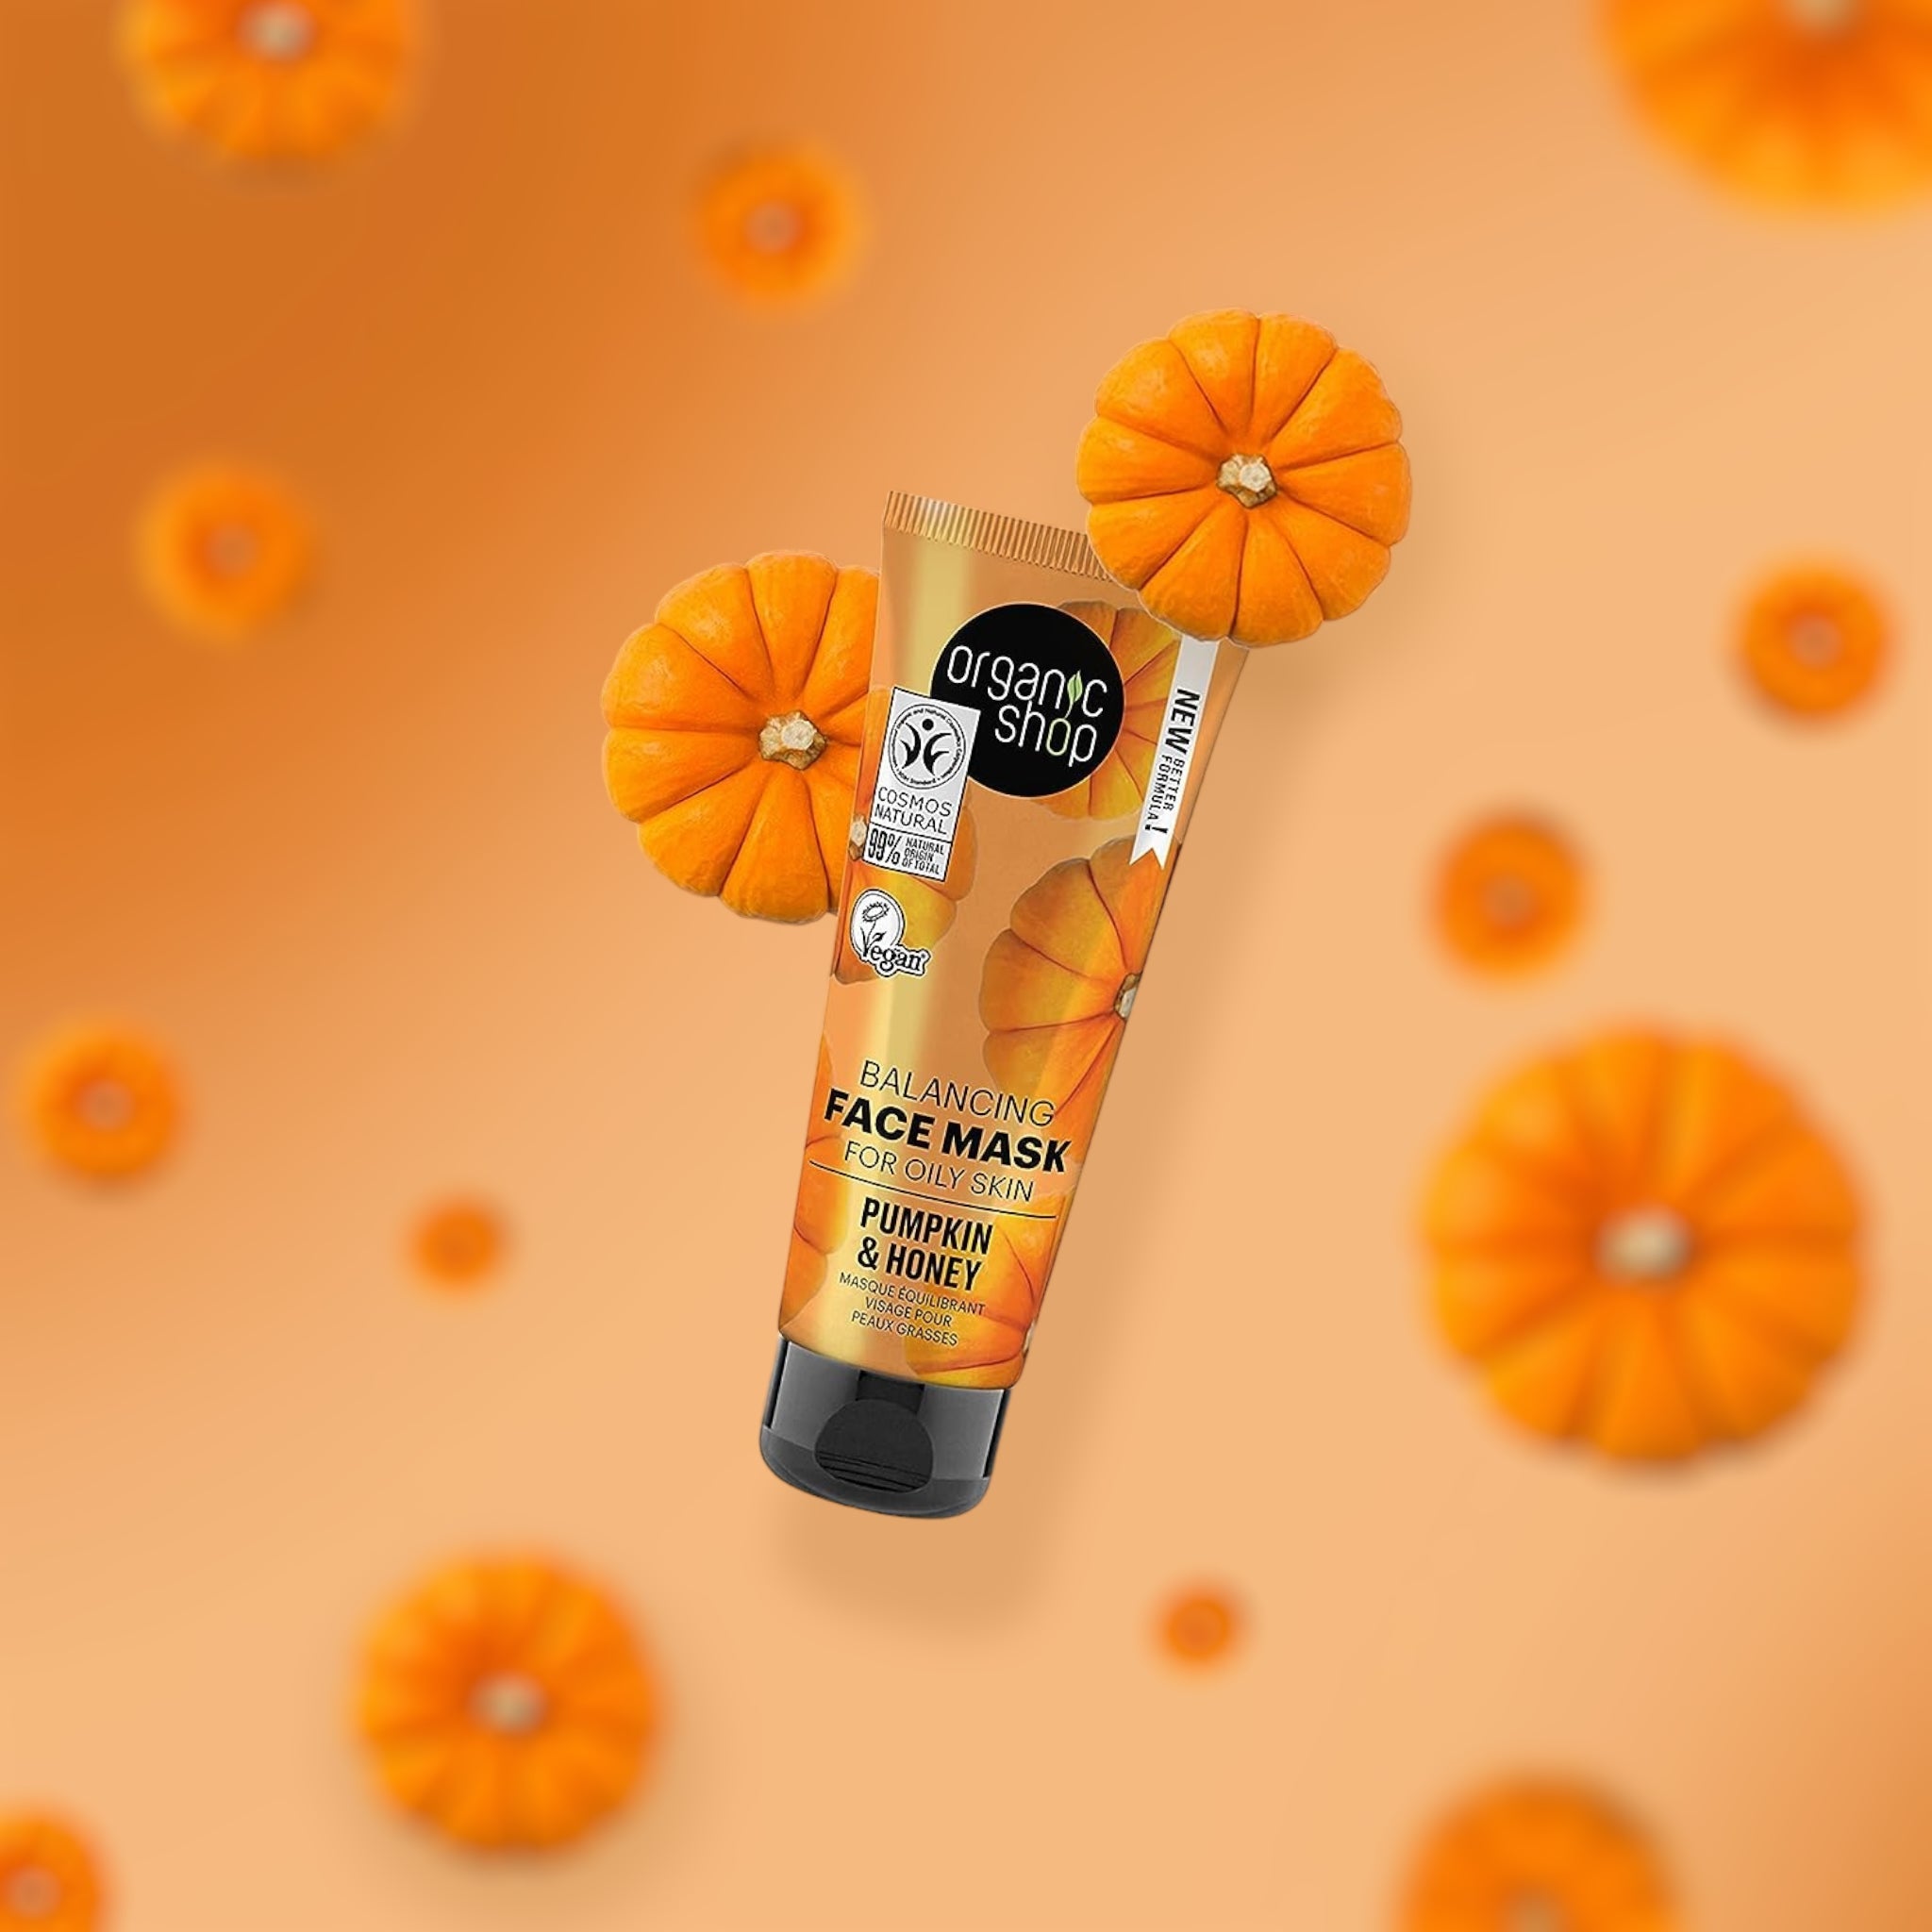 Pumpkin & Honey Balancing Face Mask - mypure.co.uk